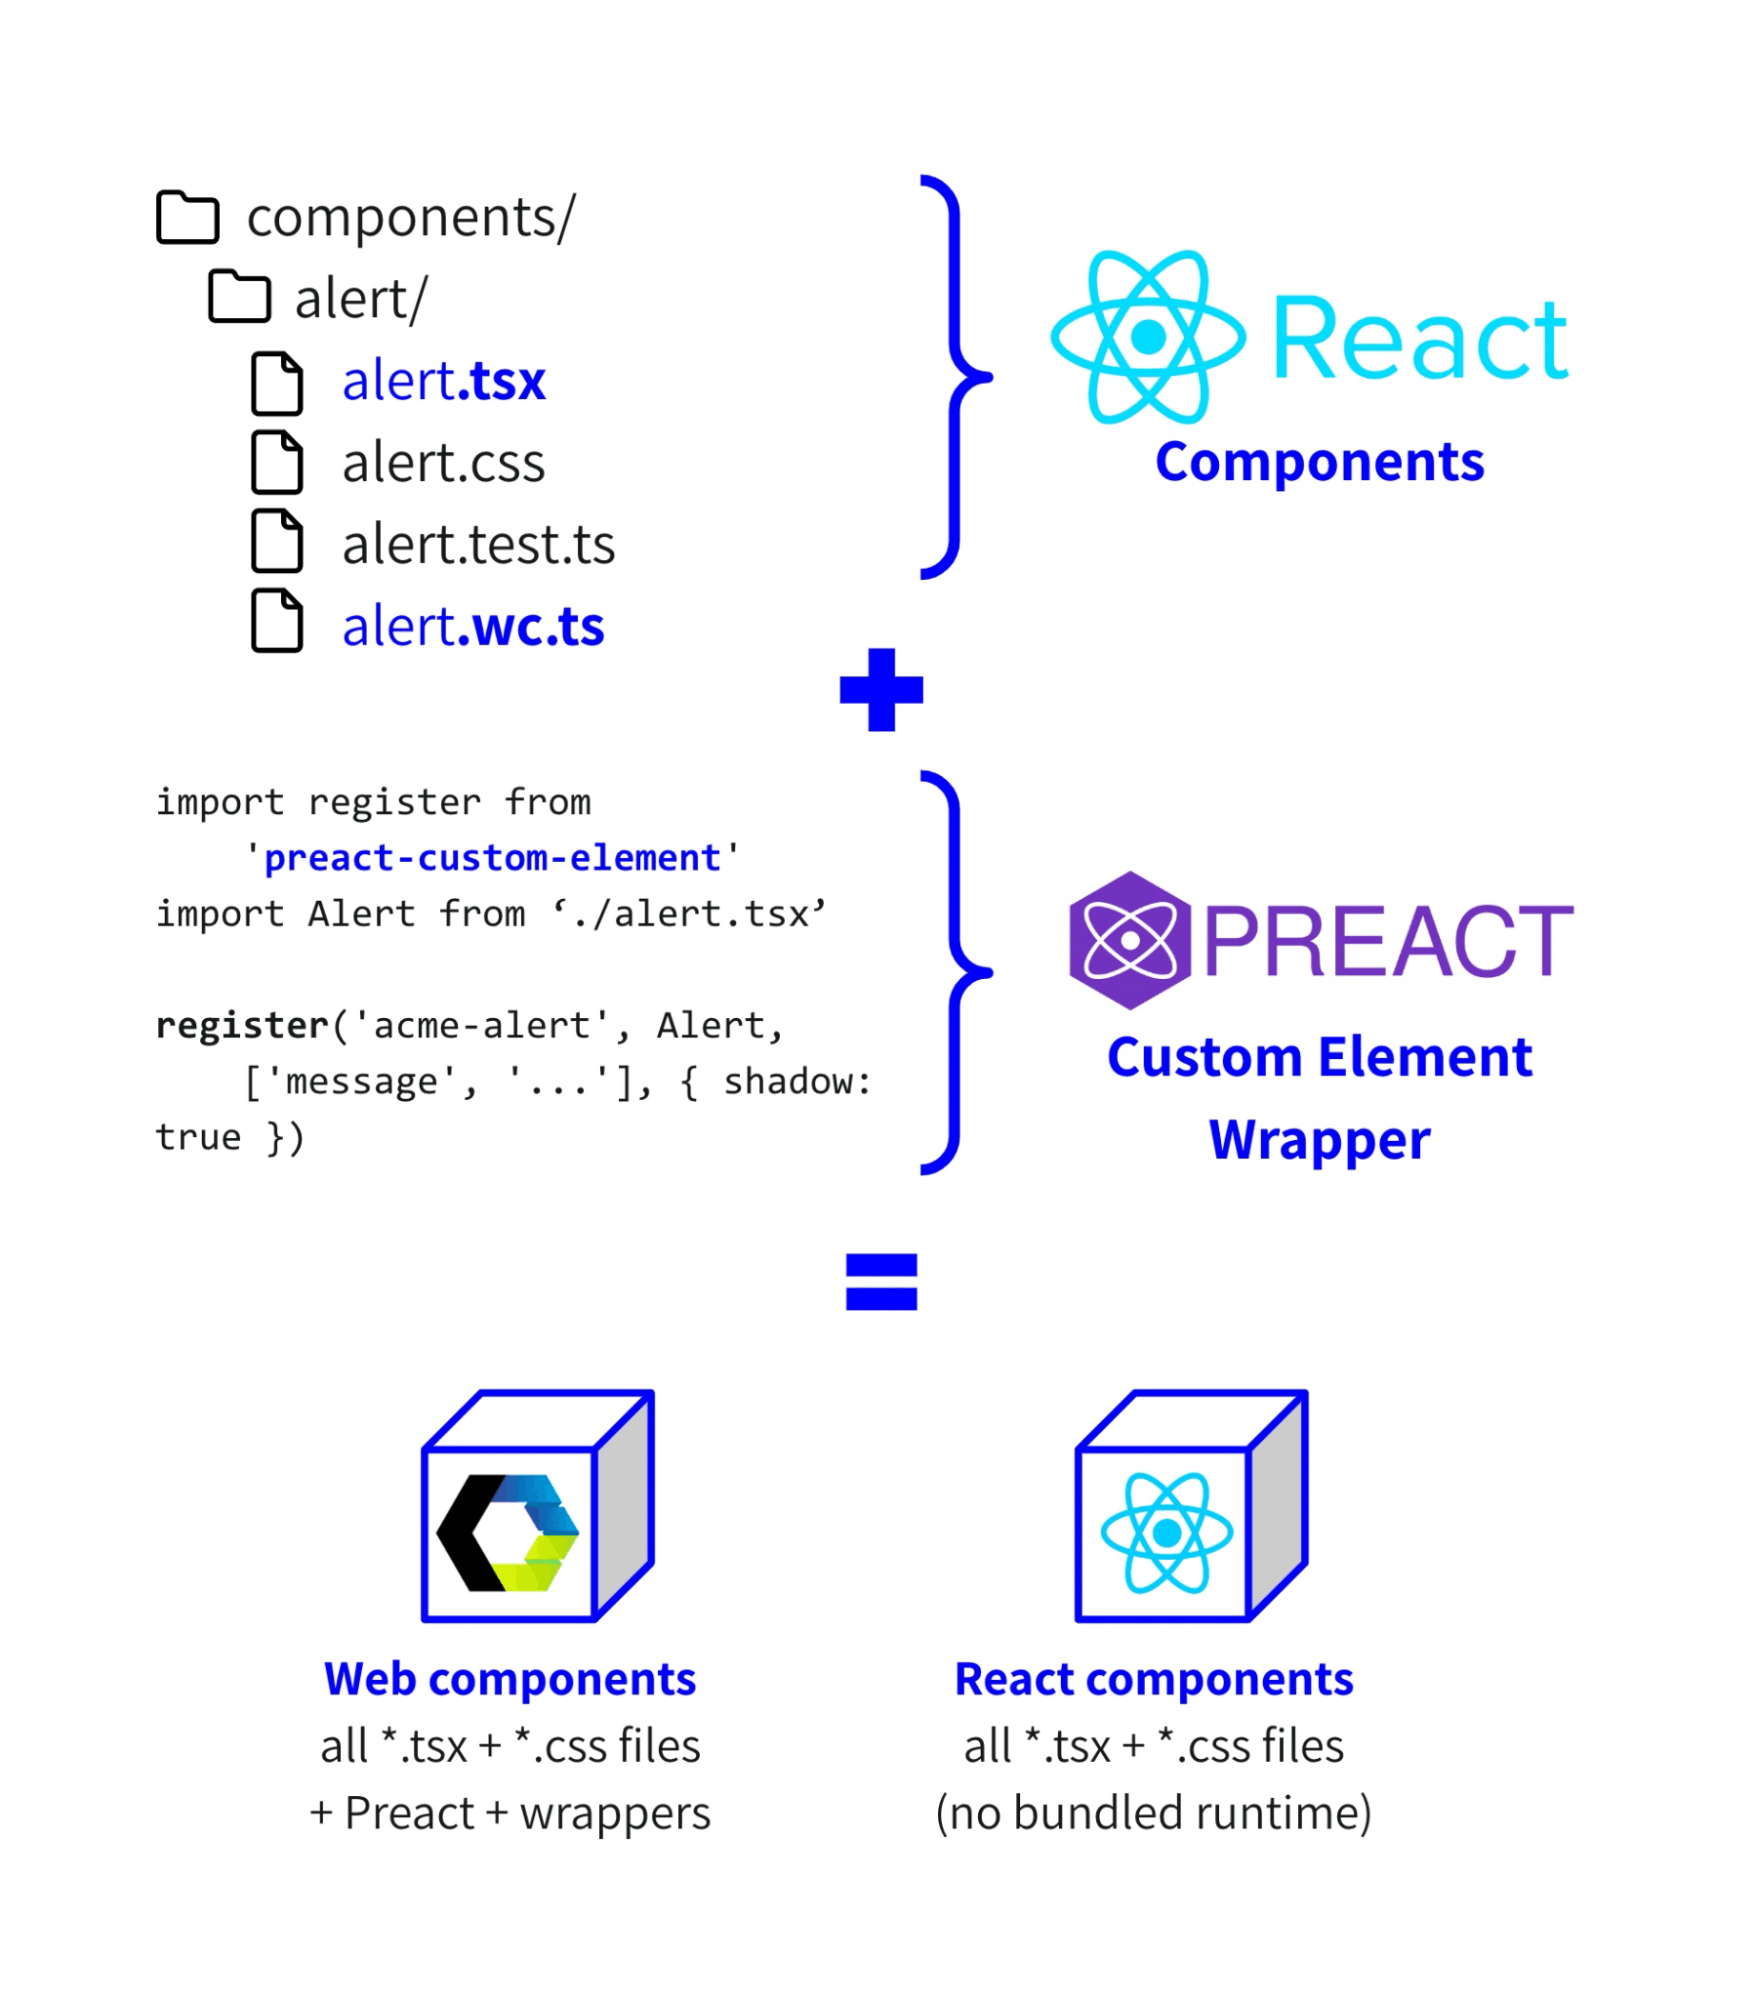 React components + Preact Custom Element Wrapper = Web components en React Components